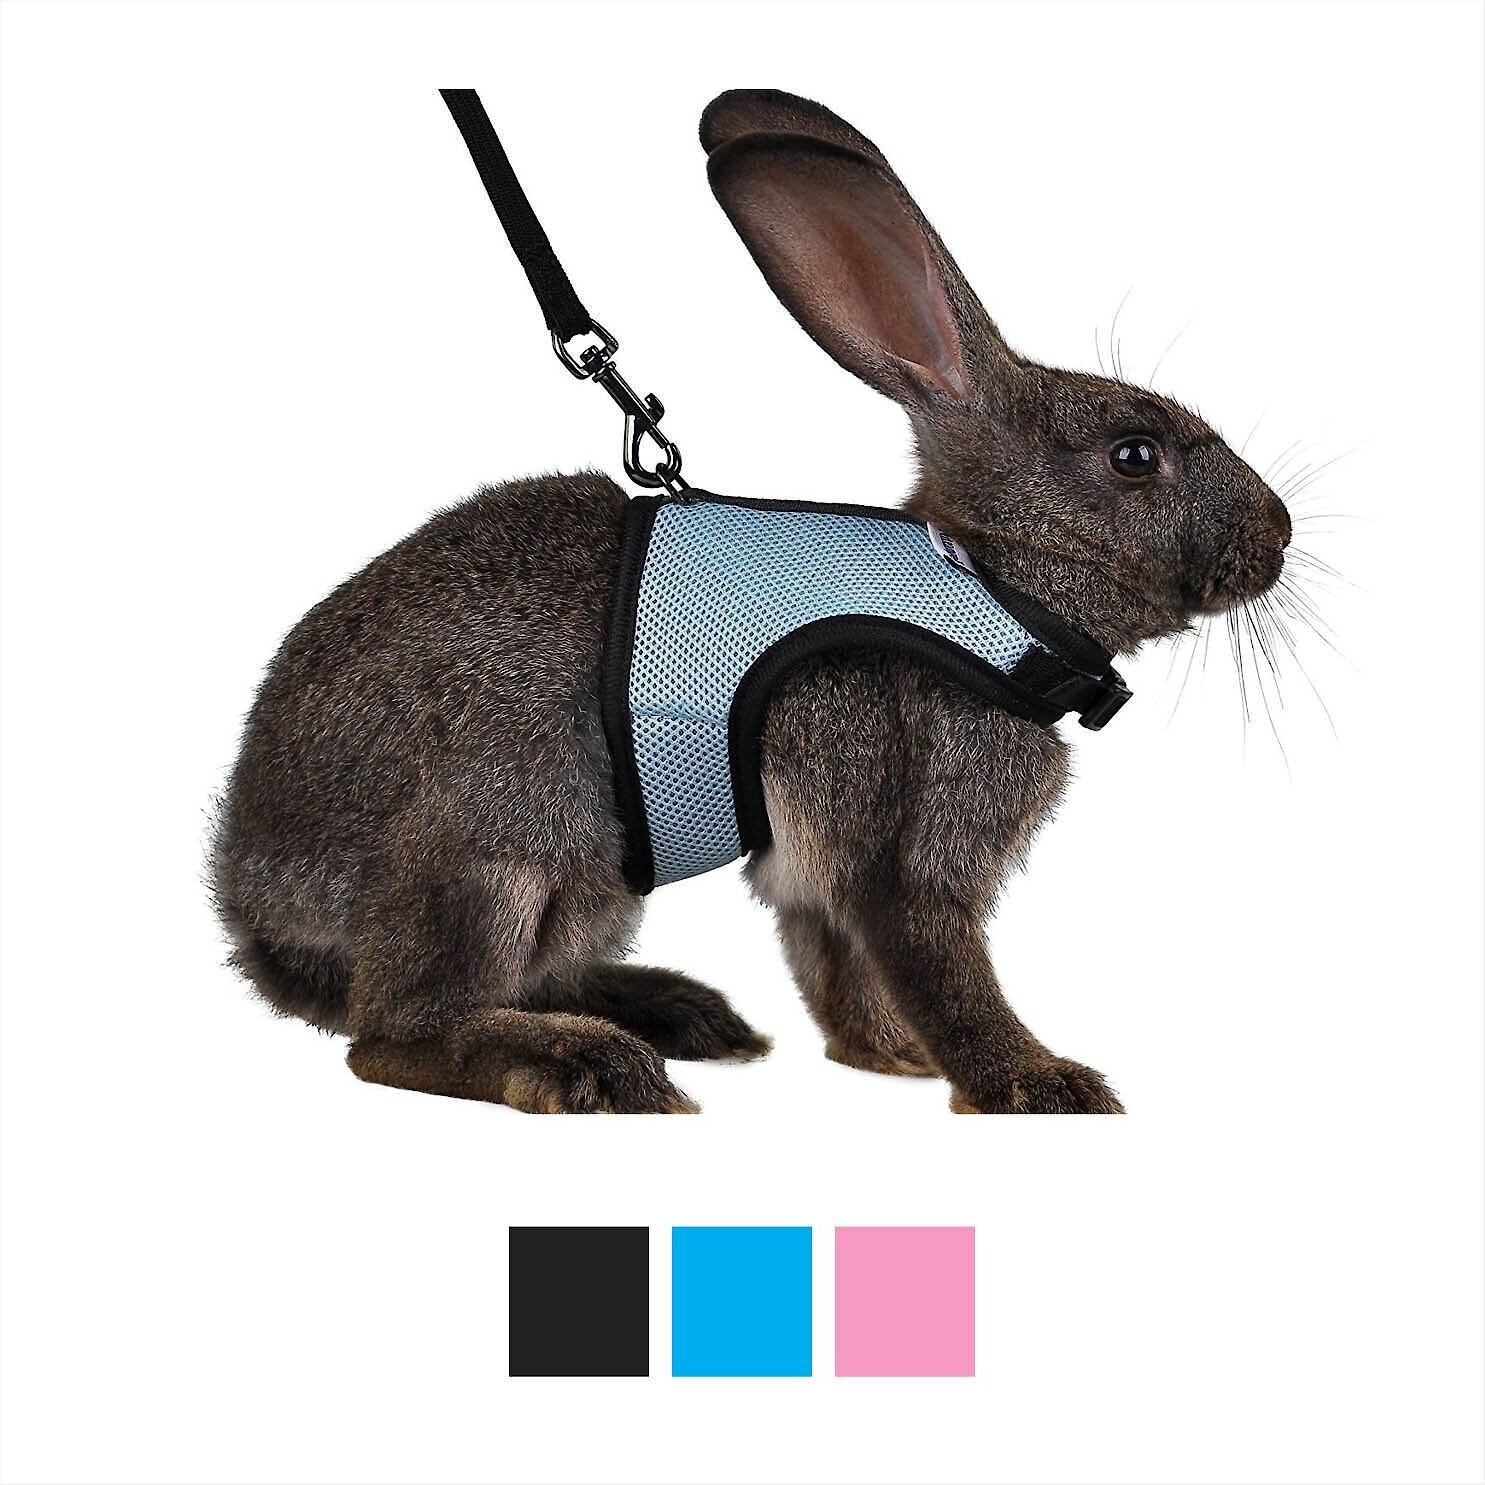 rabbit leash